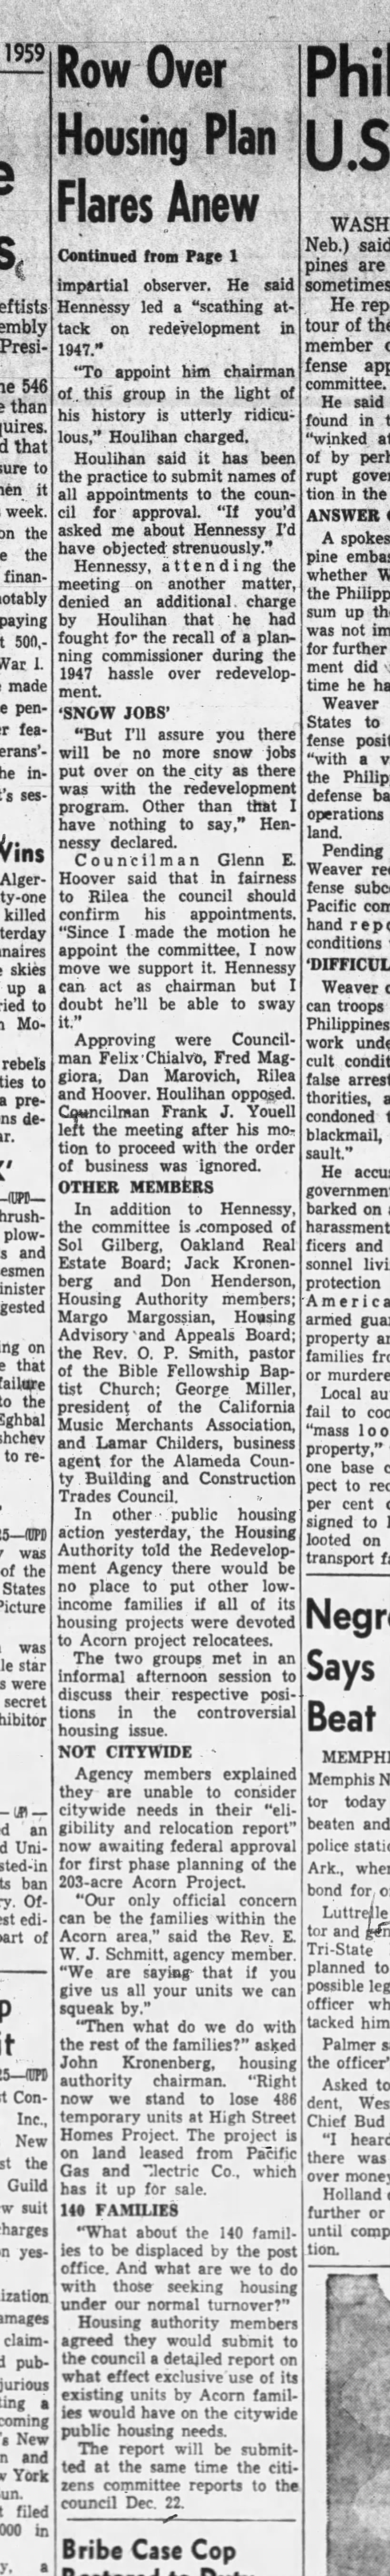 Row Over Housing Plan Flares Anew - Oakland Tribune November 25, 1959